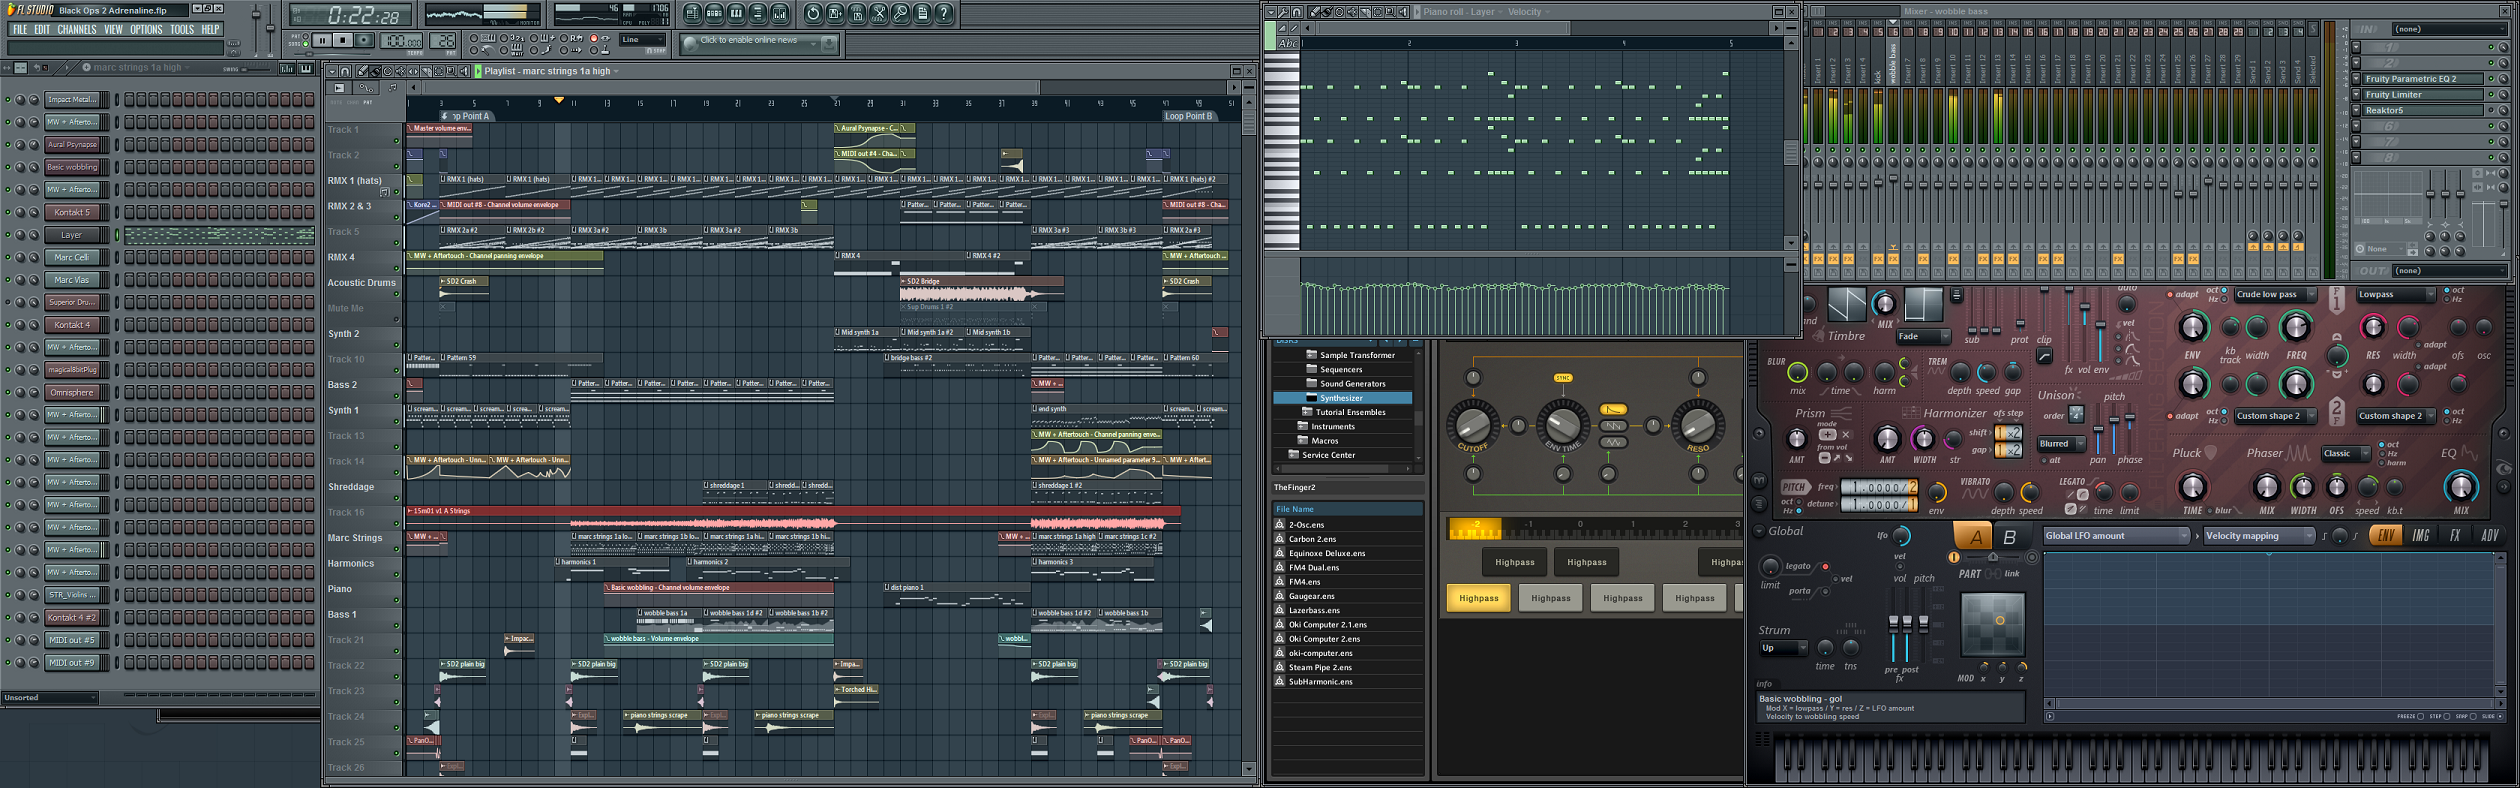 FL Studio 12.4.2.33 software screenshot